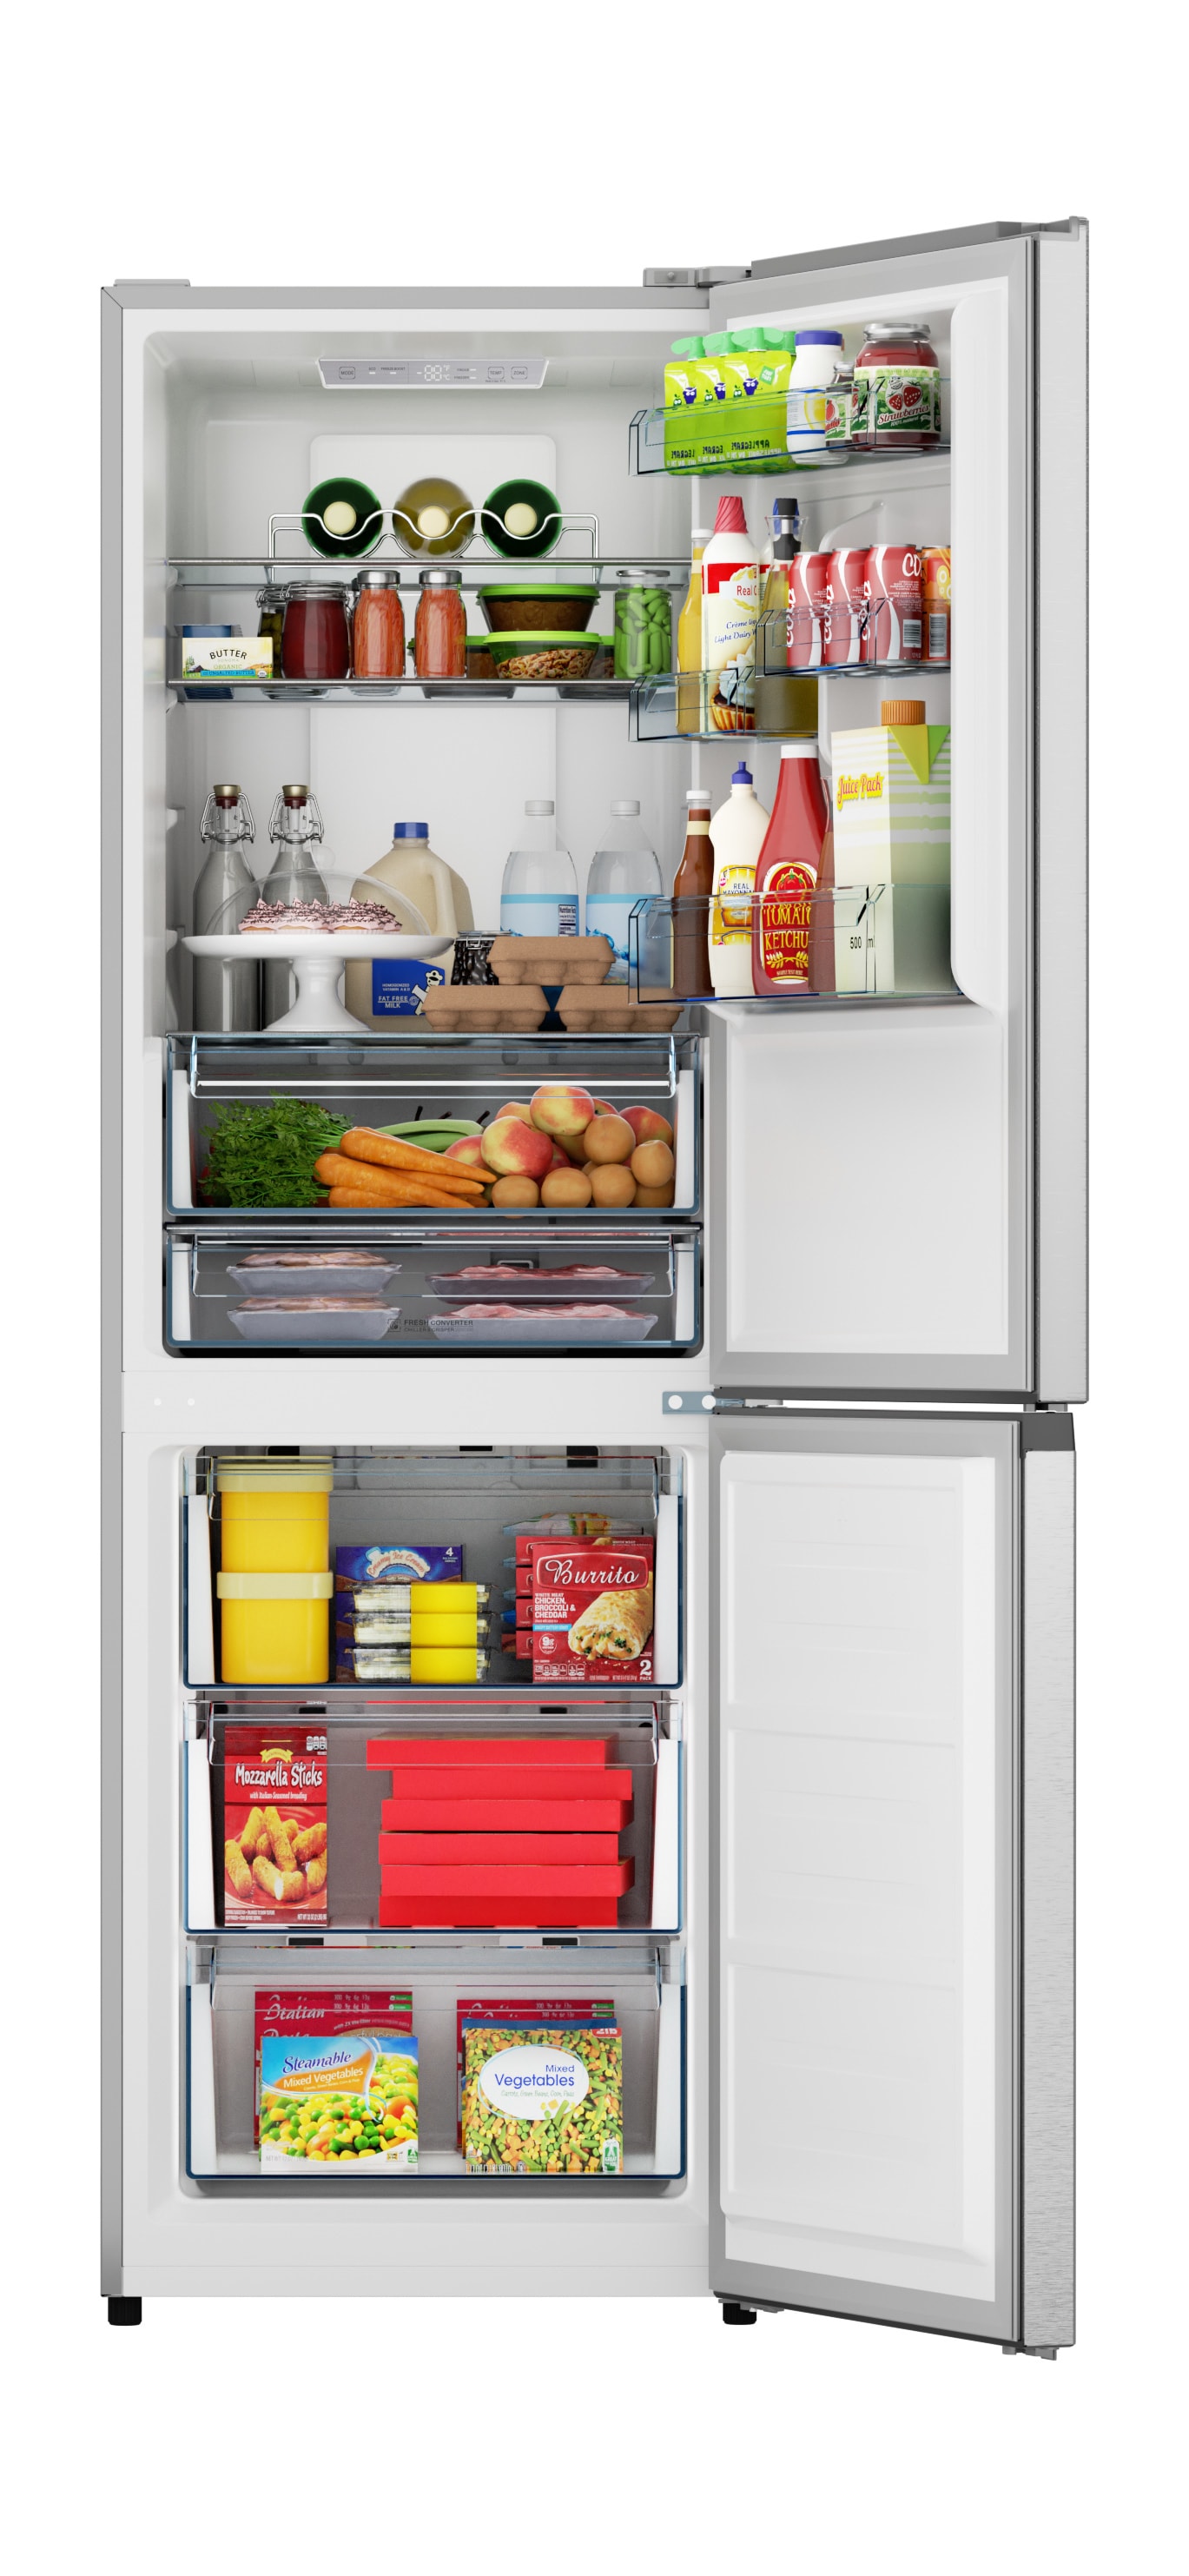 Refrigerator & Freezer Cleaner, Veggie Wash 500ml With Microfiber clot